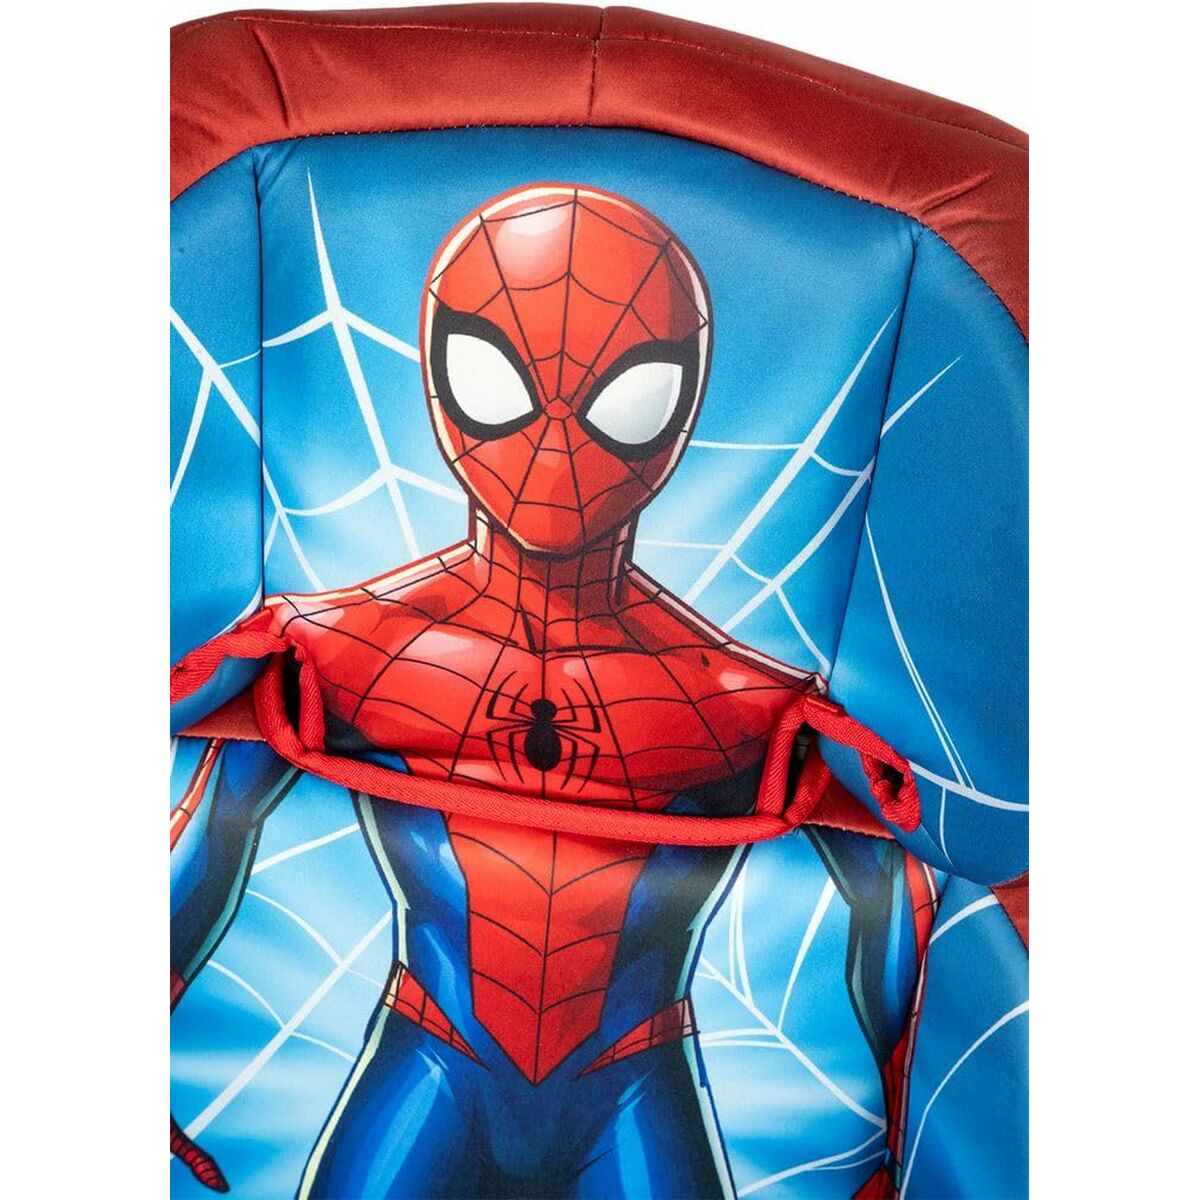 Siège de Voiture Spider-Man TETI III (22 - 36 kg) ISOFIX